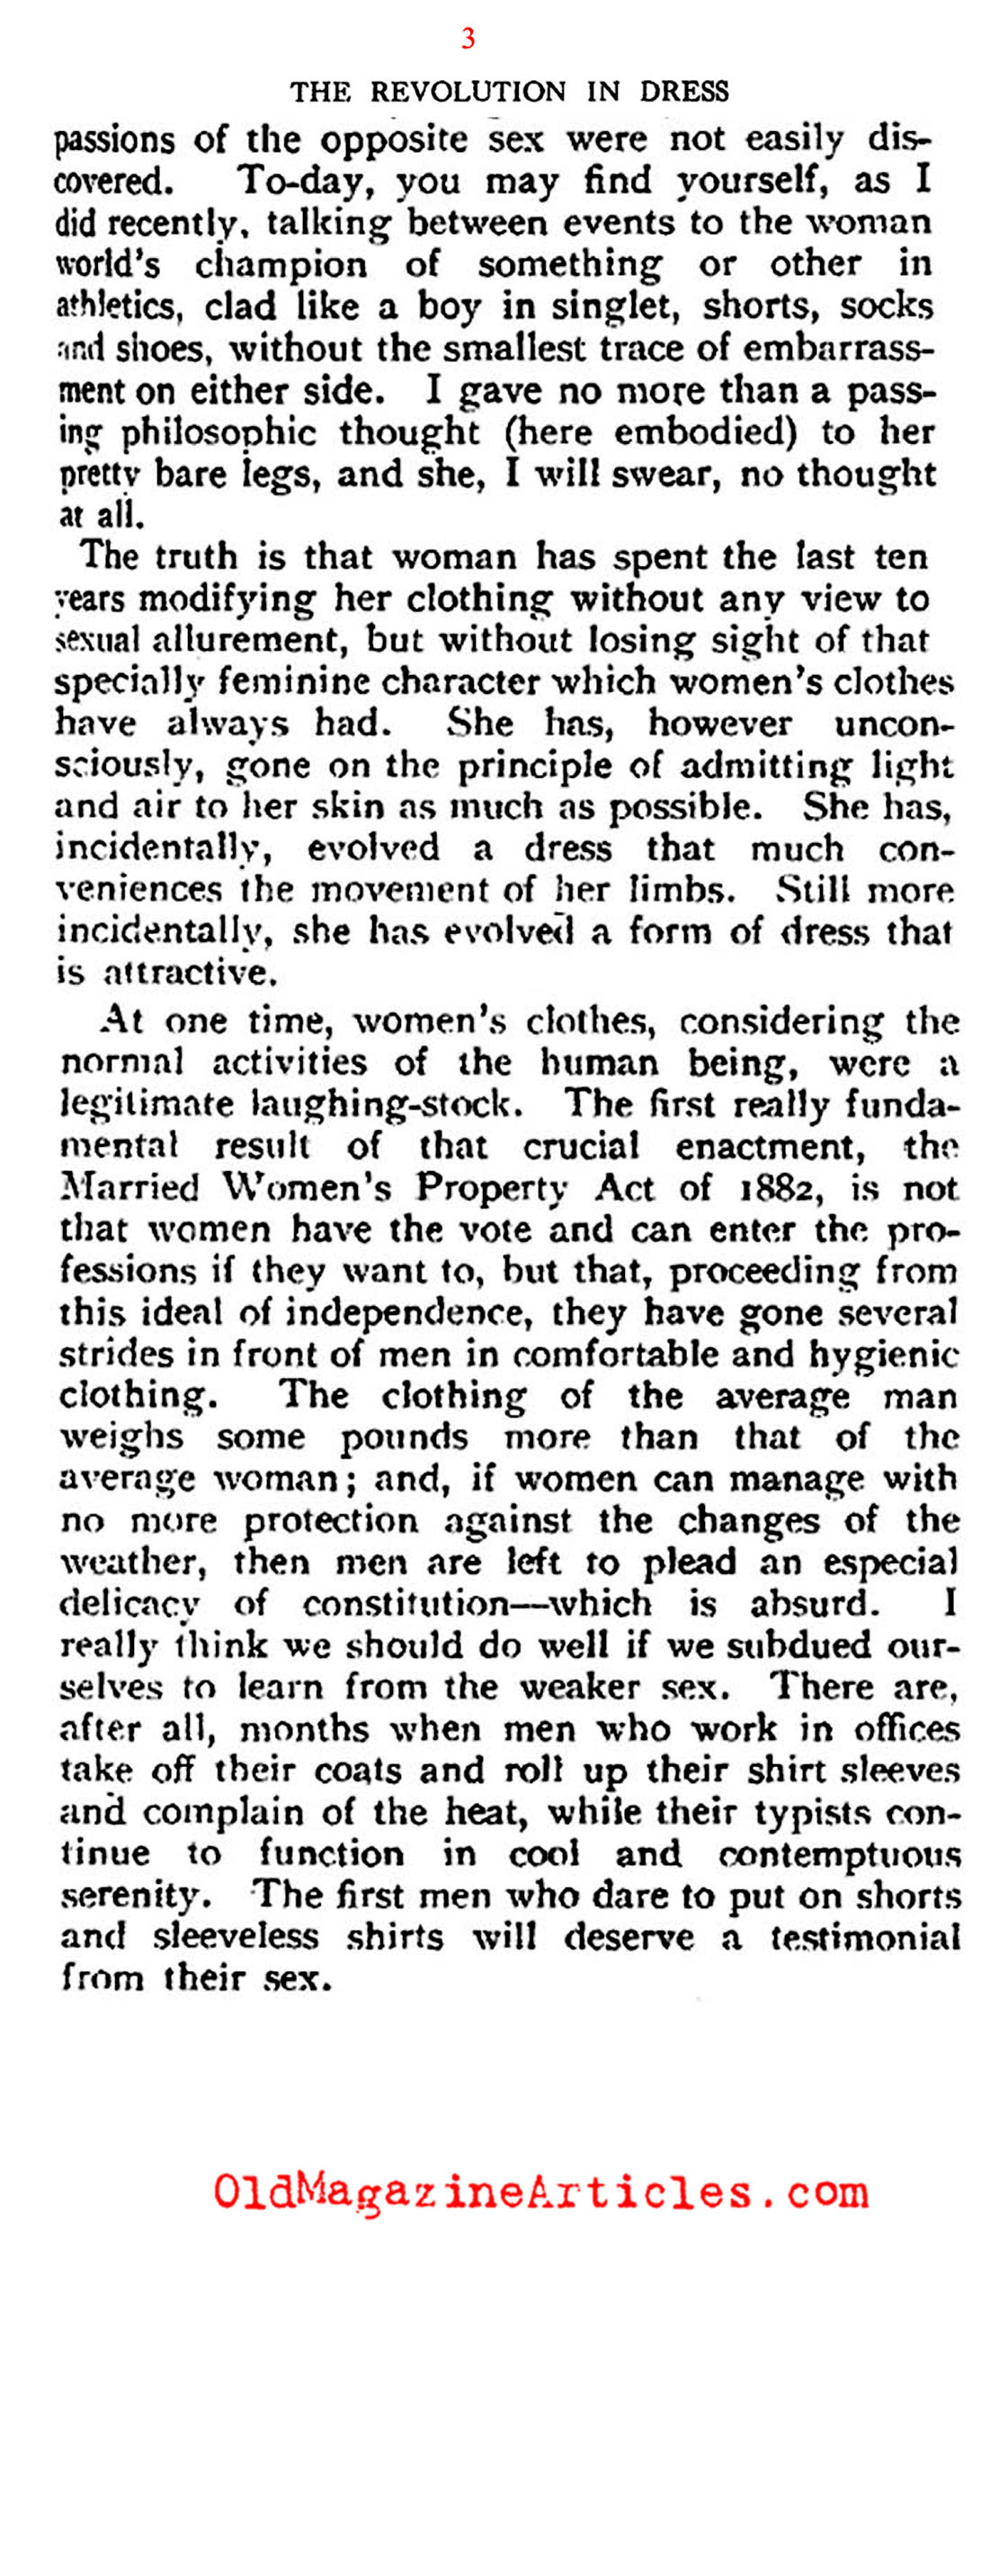 The Revolution in 1920s Fashion (Saturday Review of Literature, 1925)